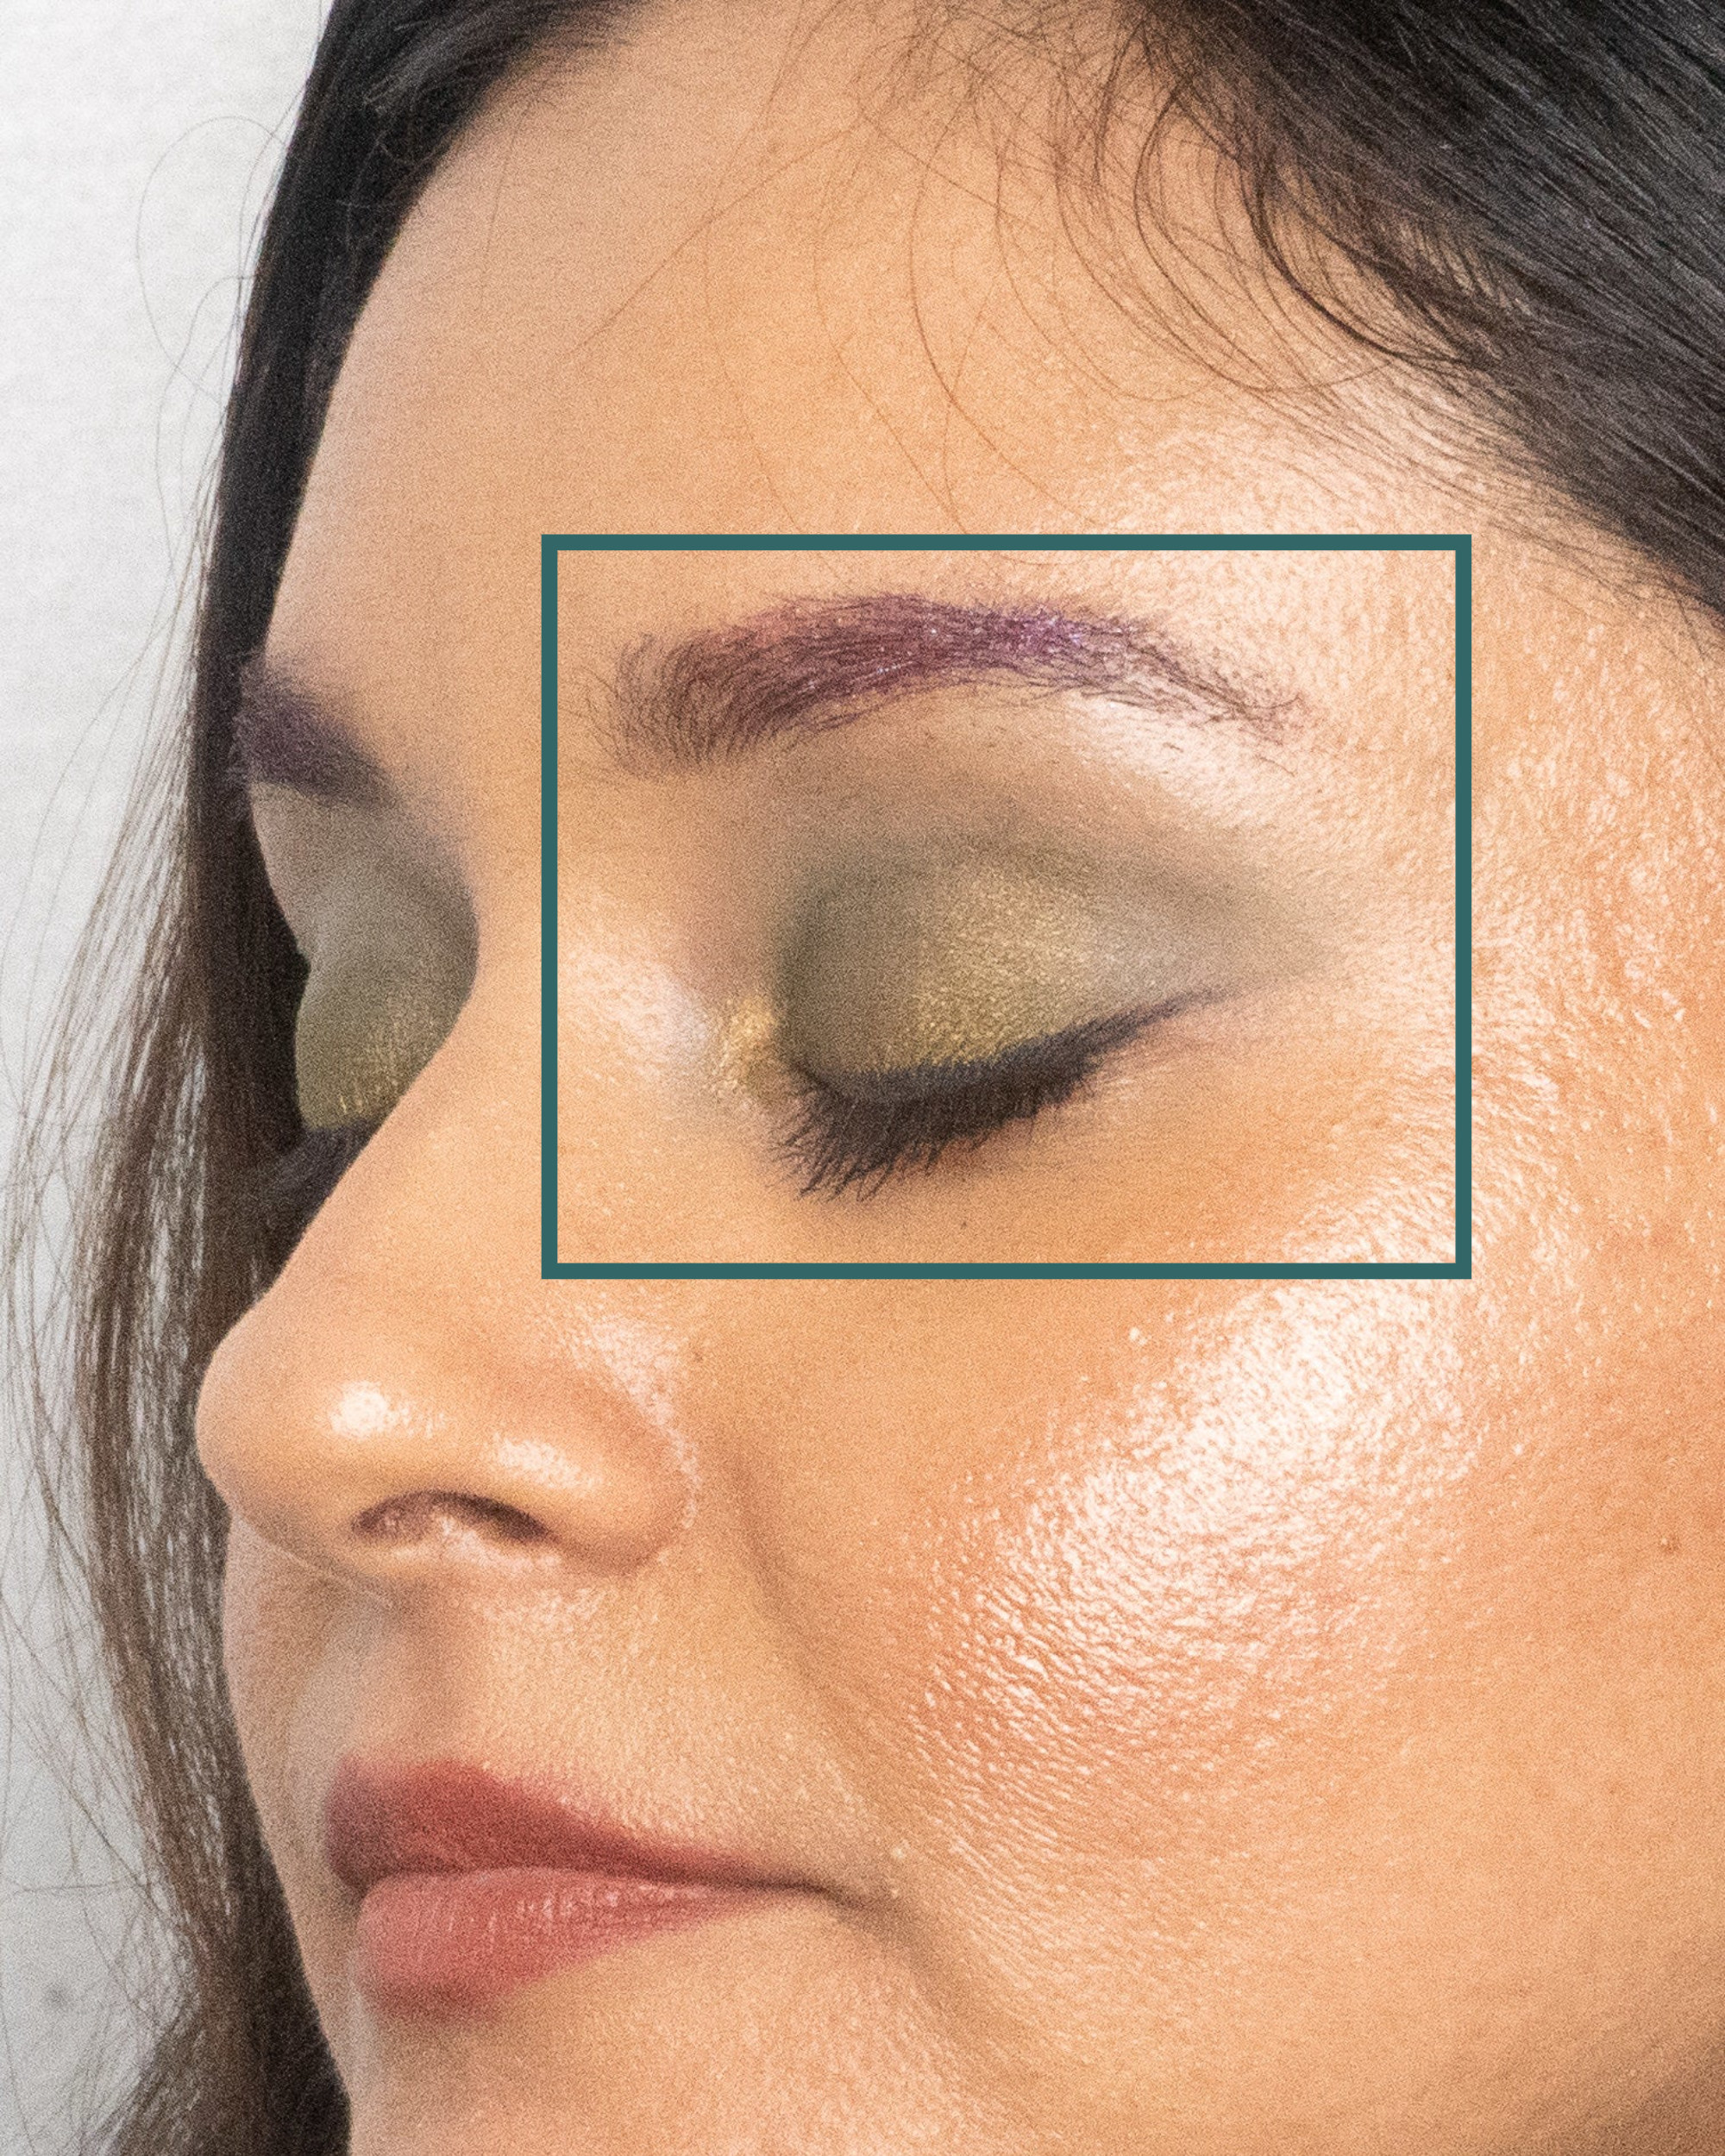 close up image of a woman with makeup